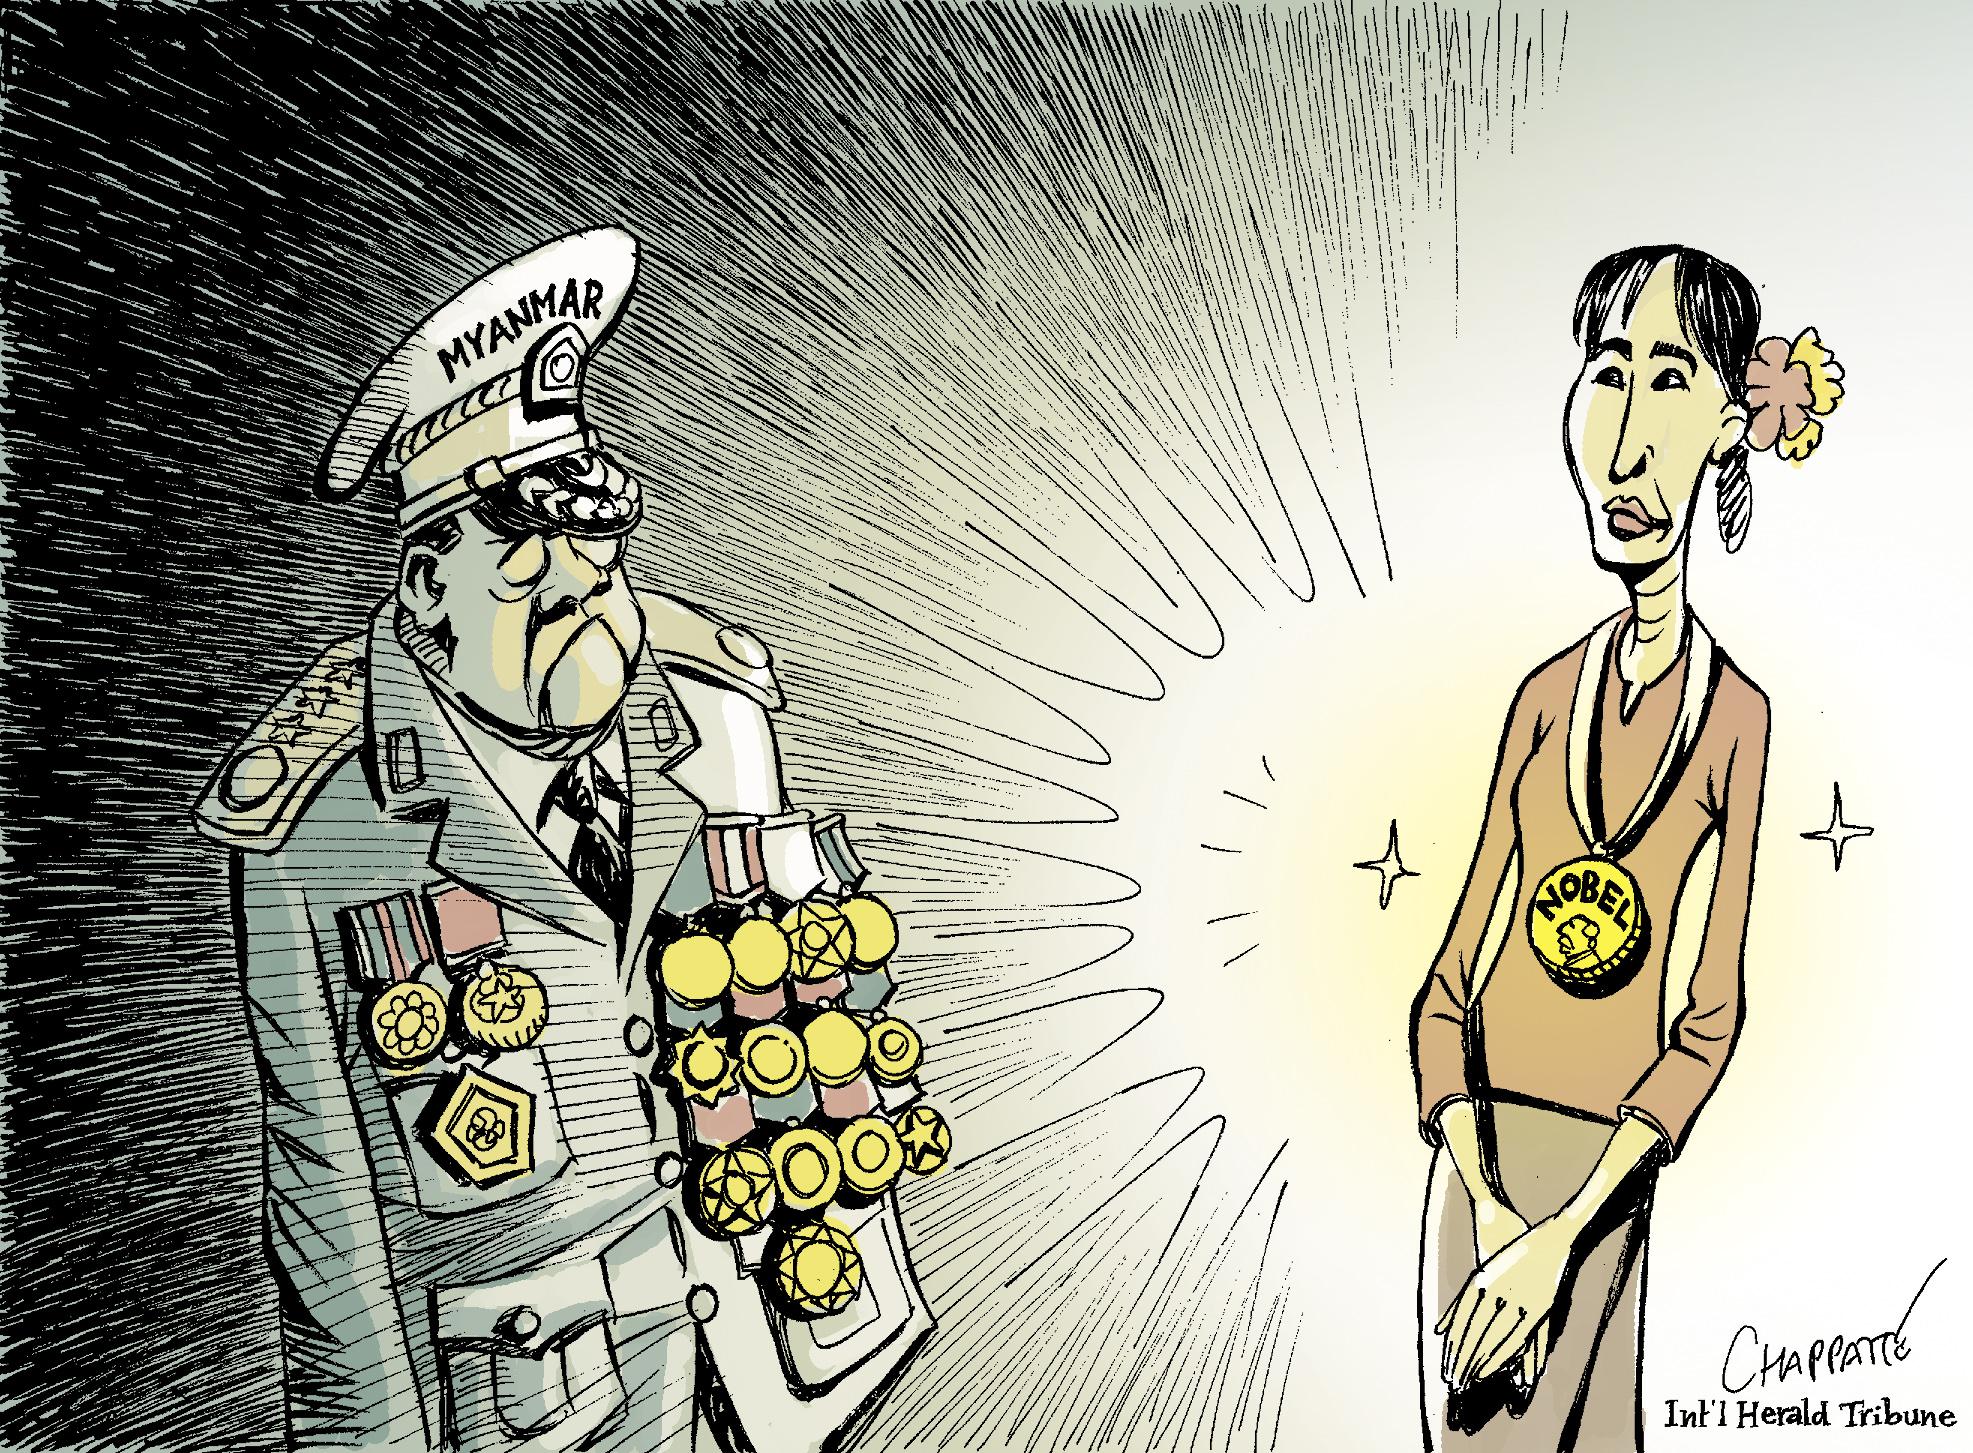 Aung San Suu Kyi receives her Nobel